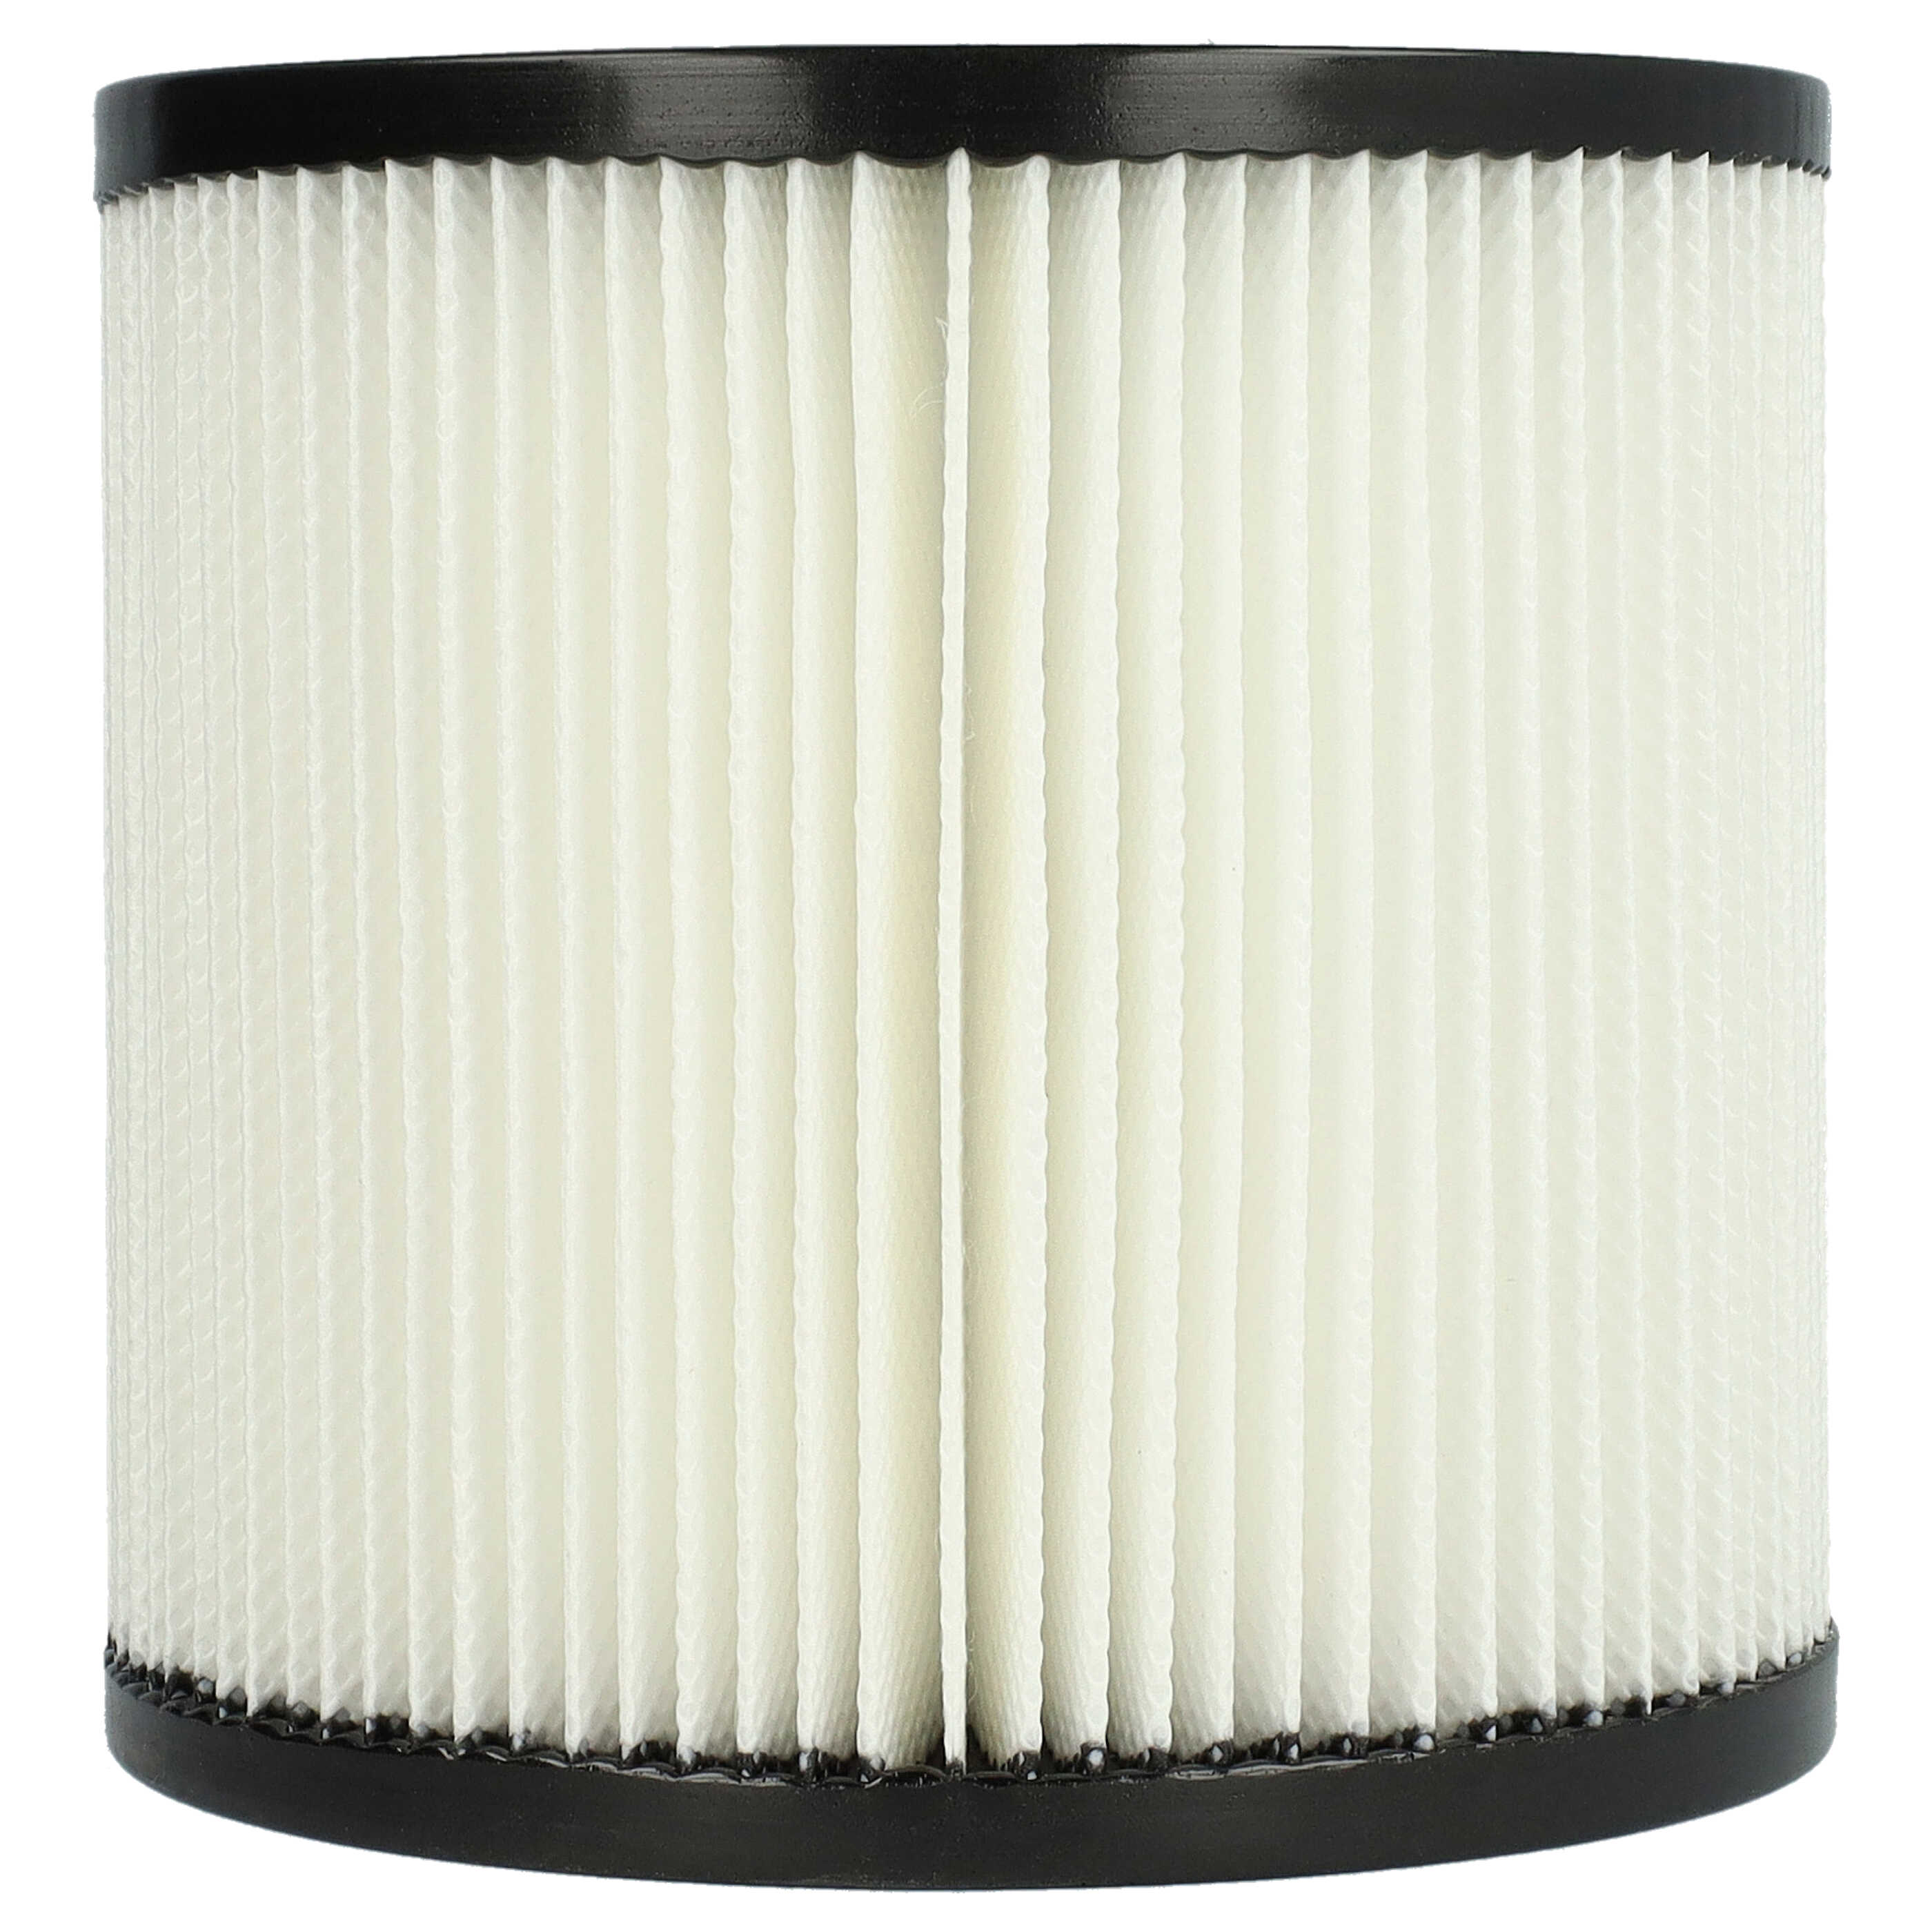 1x cartridge filter replaces Kärcher 2.889-219.0 for KärcherVacuum Cleaner, black / white